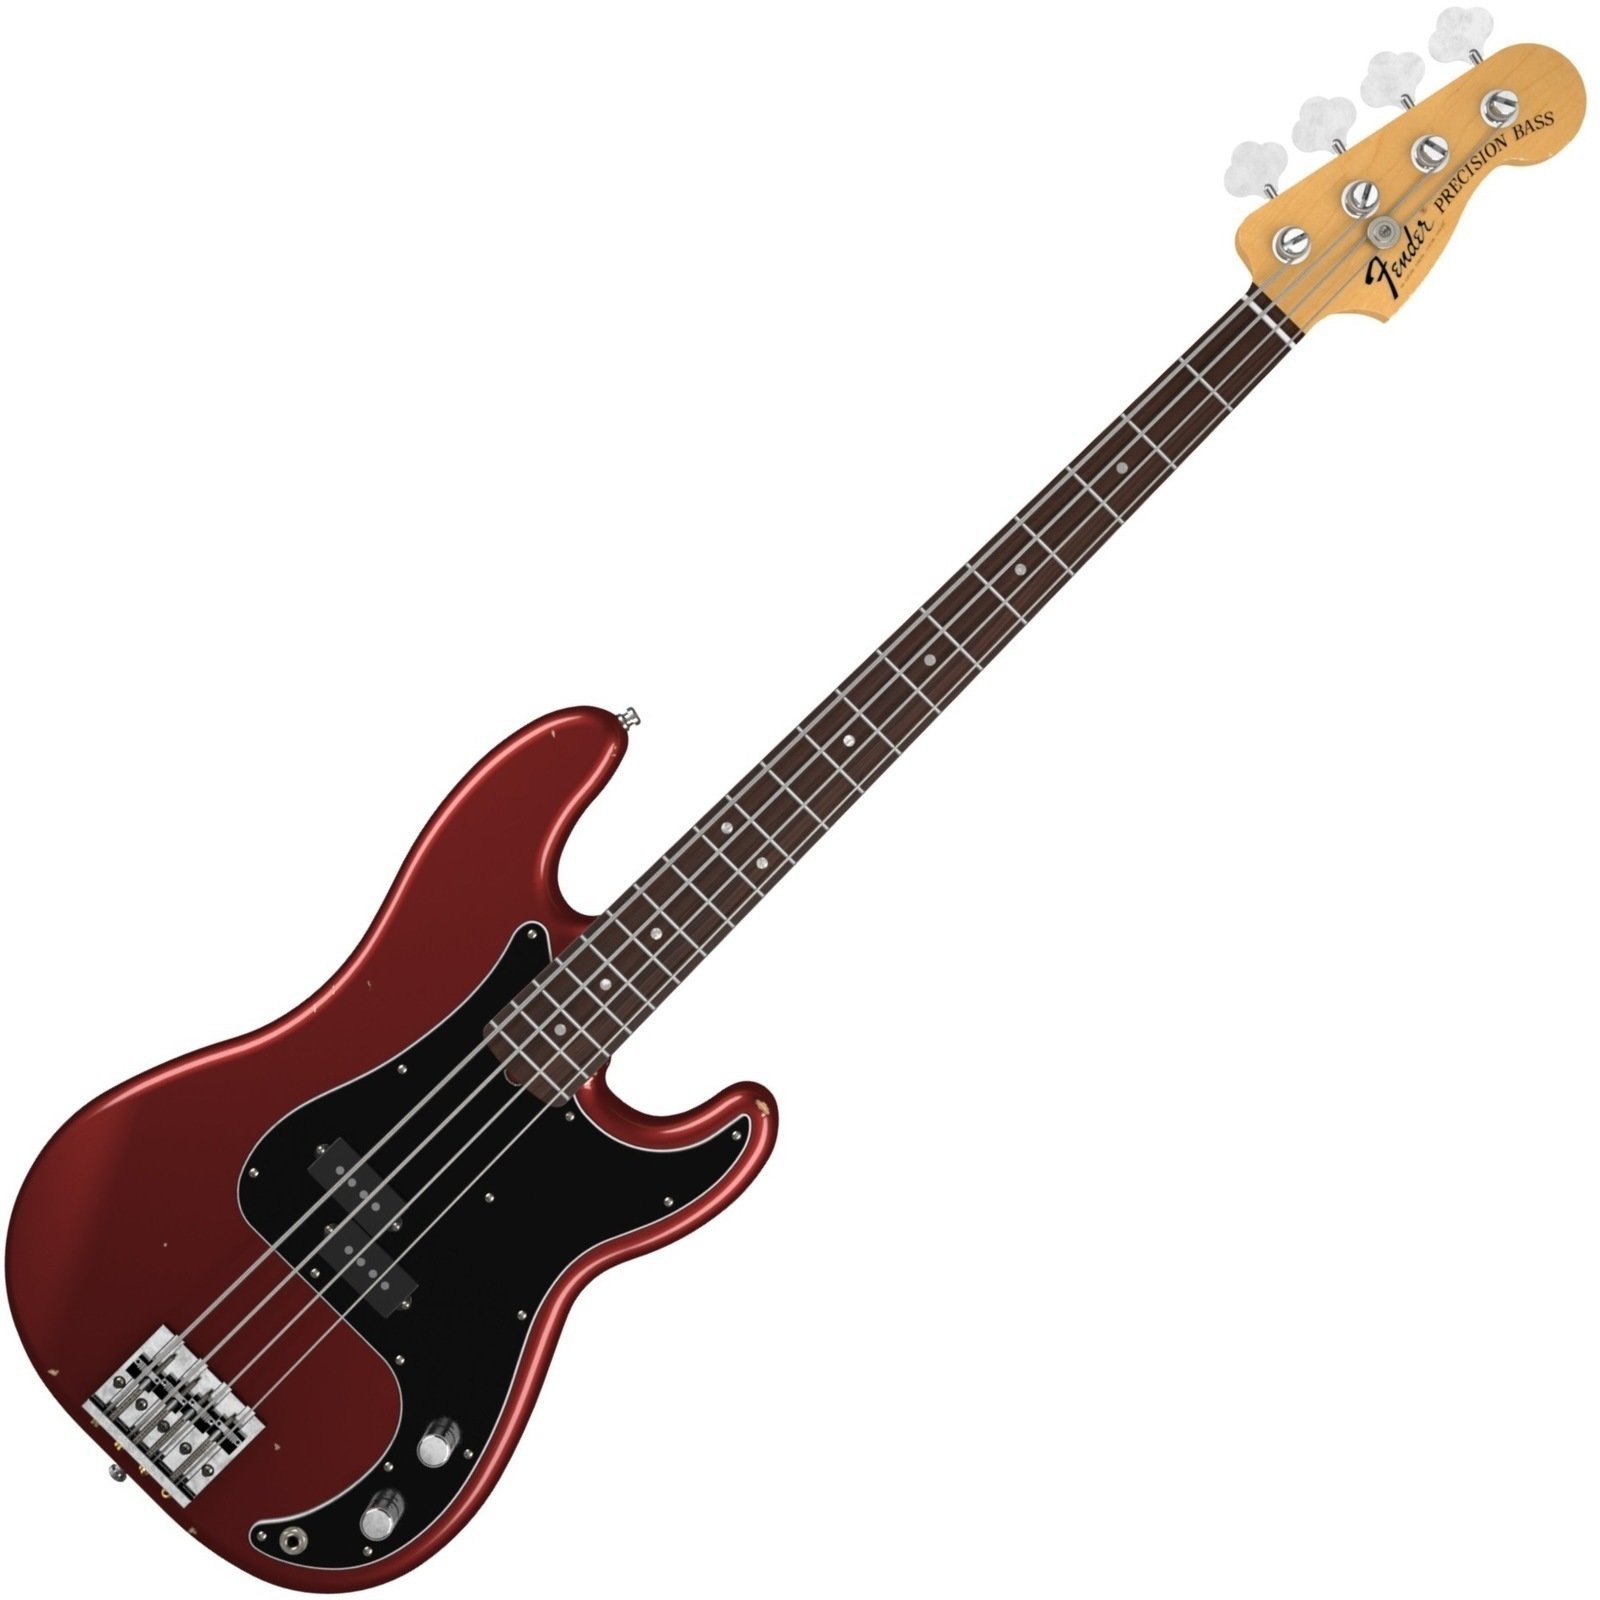 Fender Nate Mendel P Bass RW Candy Apple Red Fender